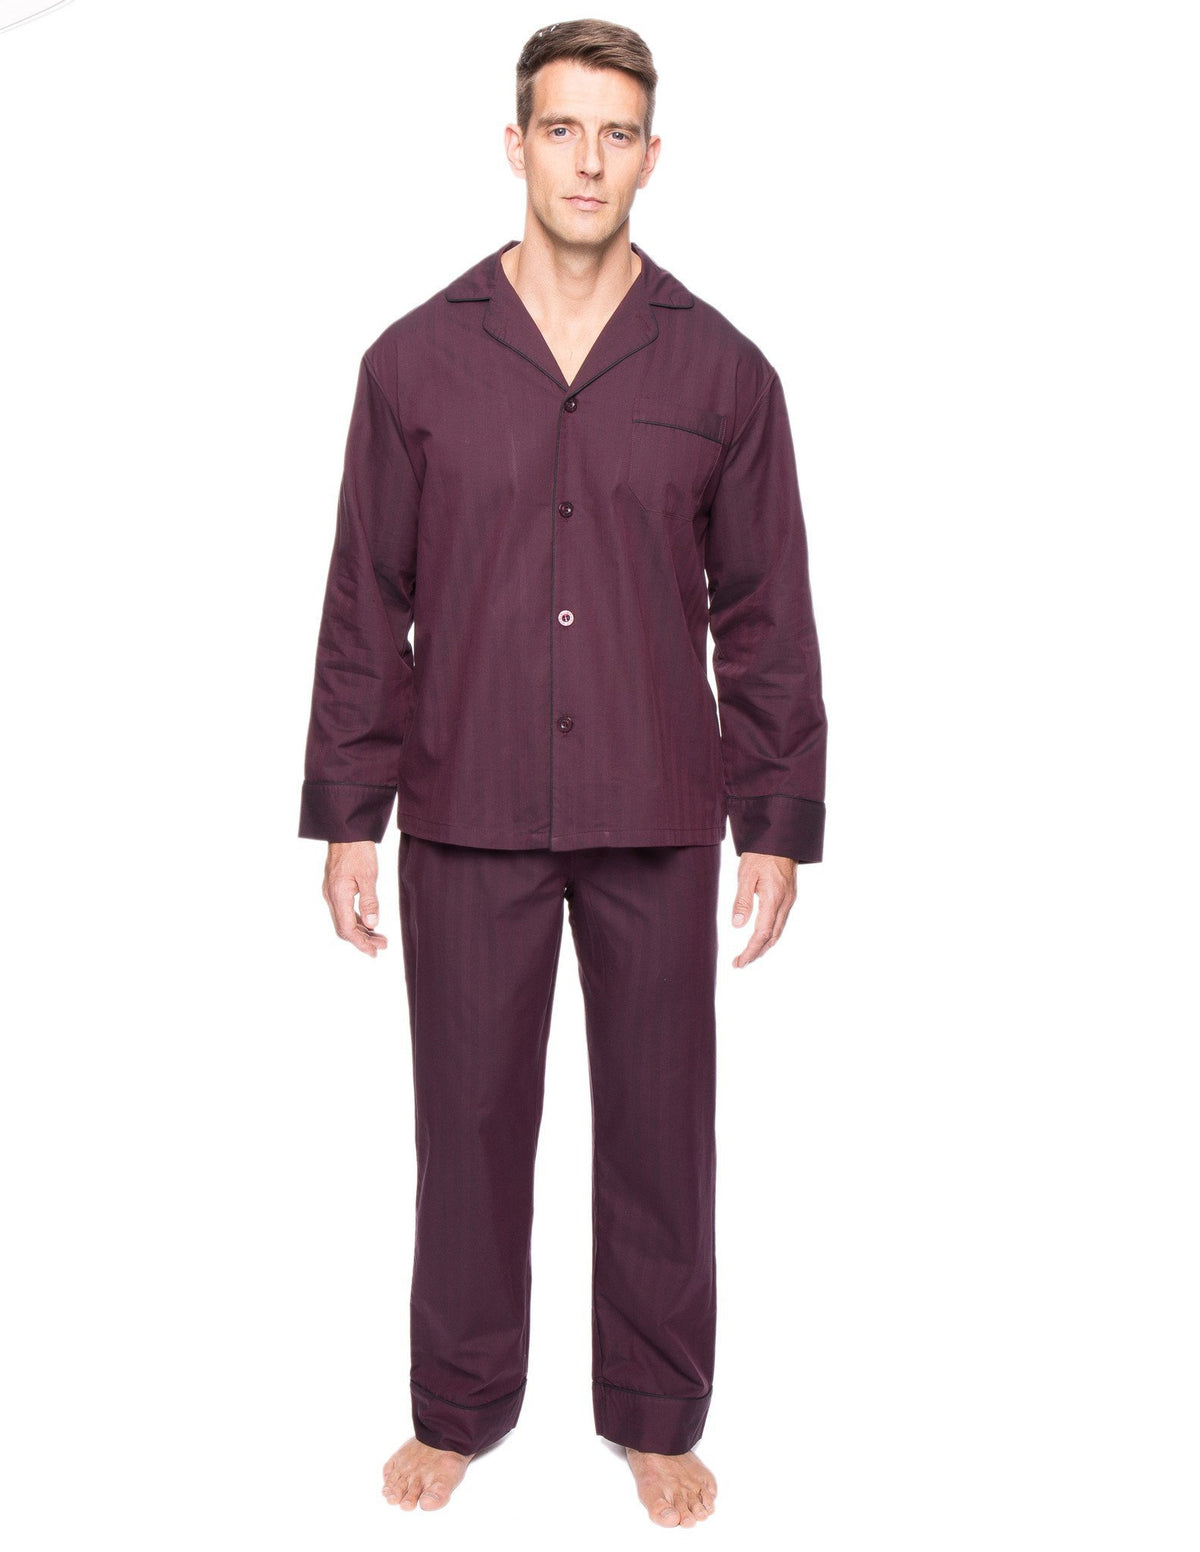 Men's Premium 100% Cotton Woven Pajama Sleepwear Set - Herringbone Fig/Black